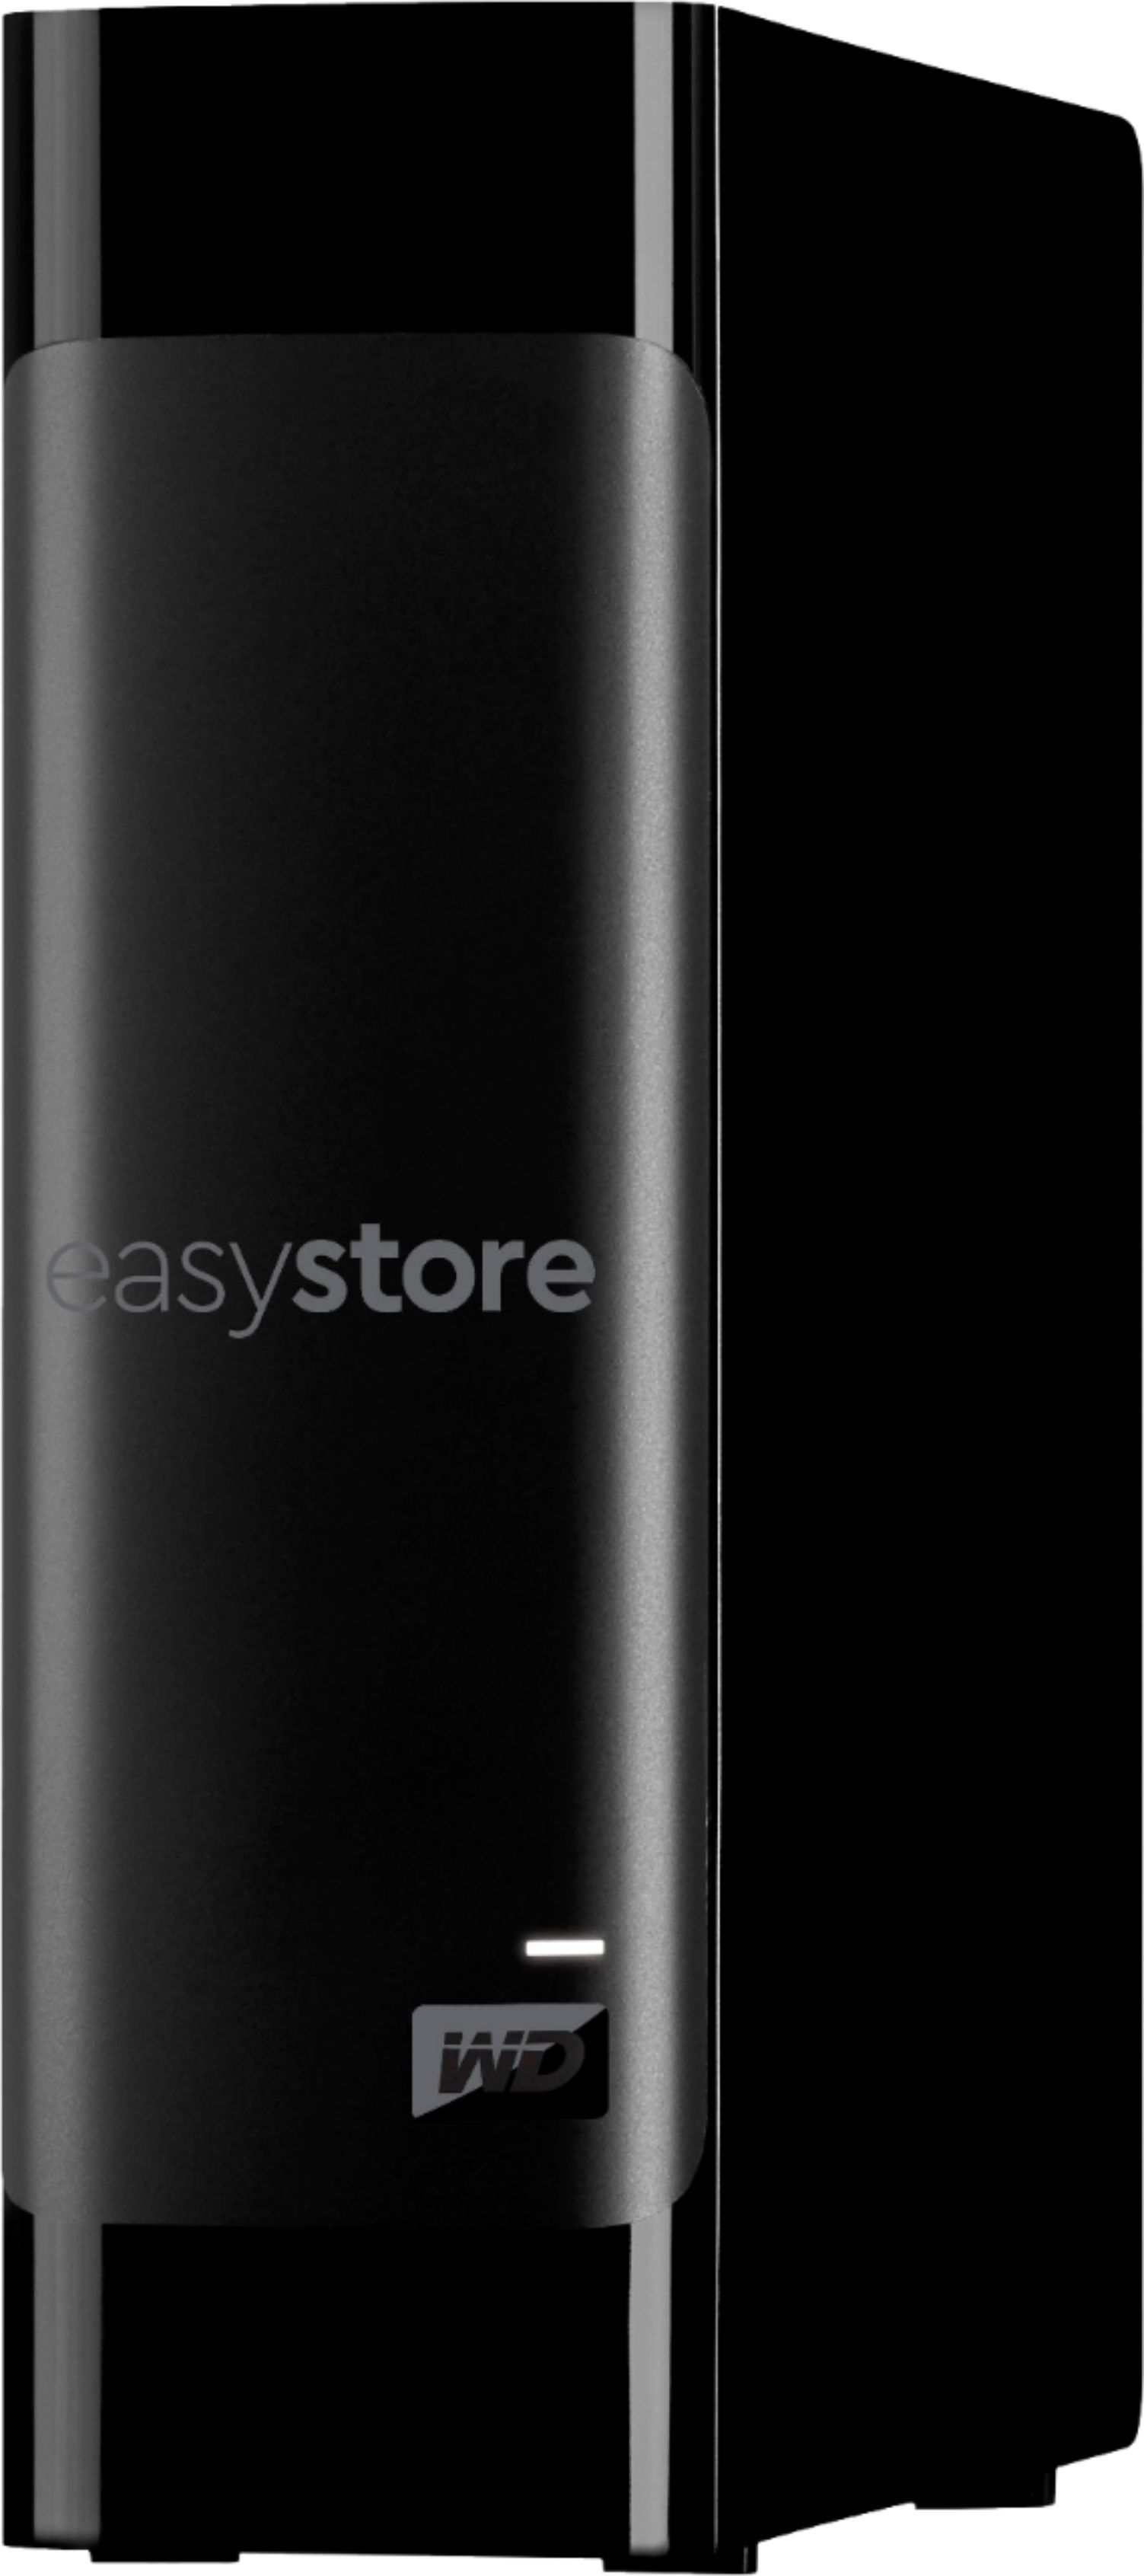 WD easystore 8TB External USB 3.0 Hard Drive Black WDBAMA0080HBK-NESN  Best Buy